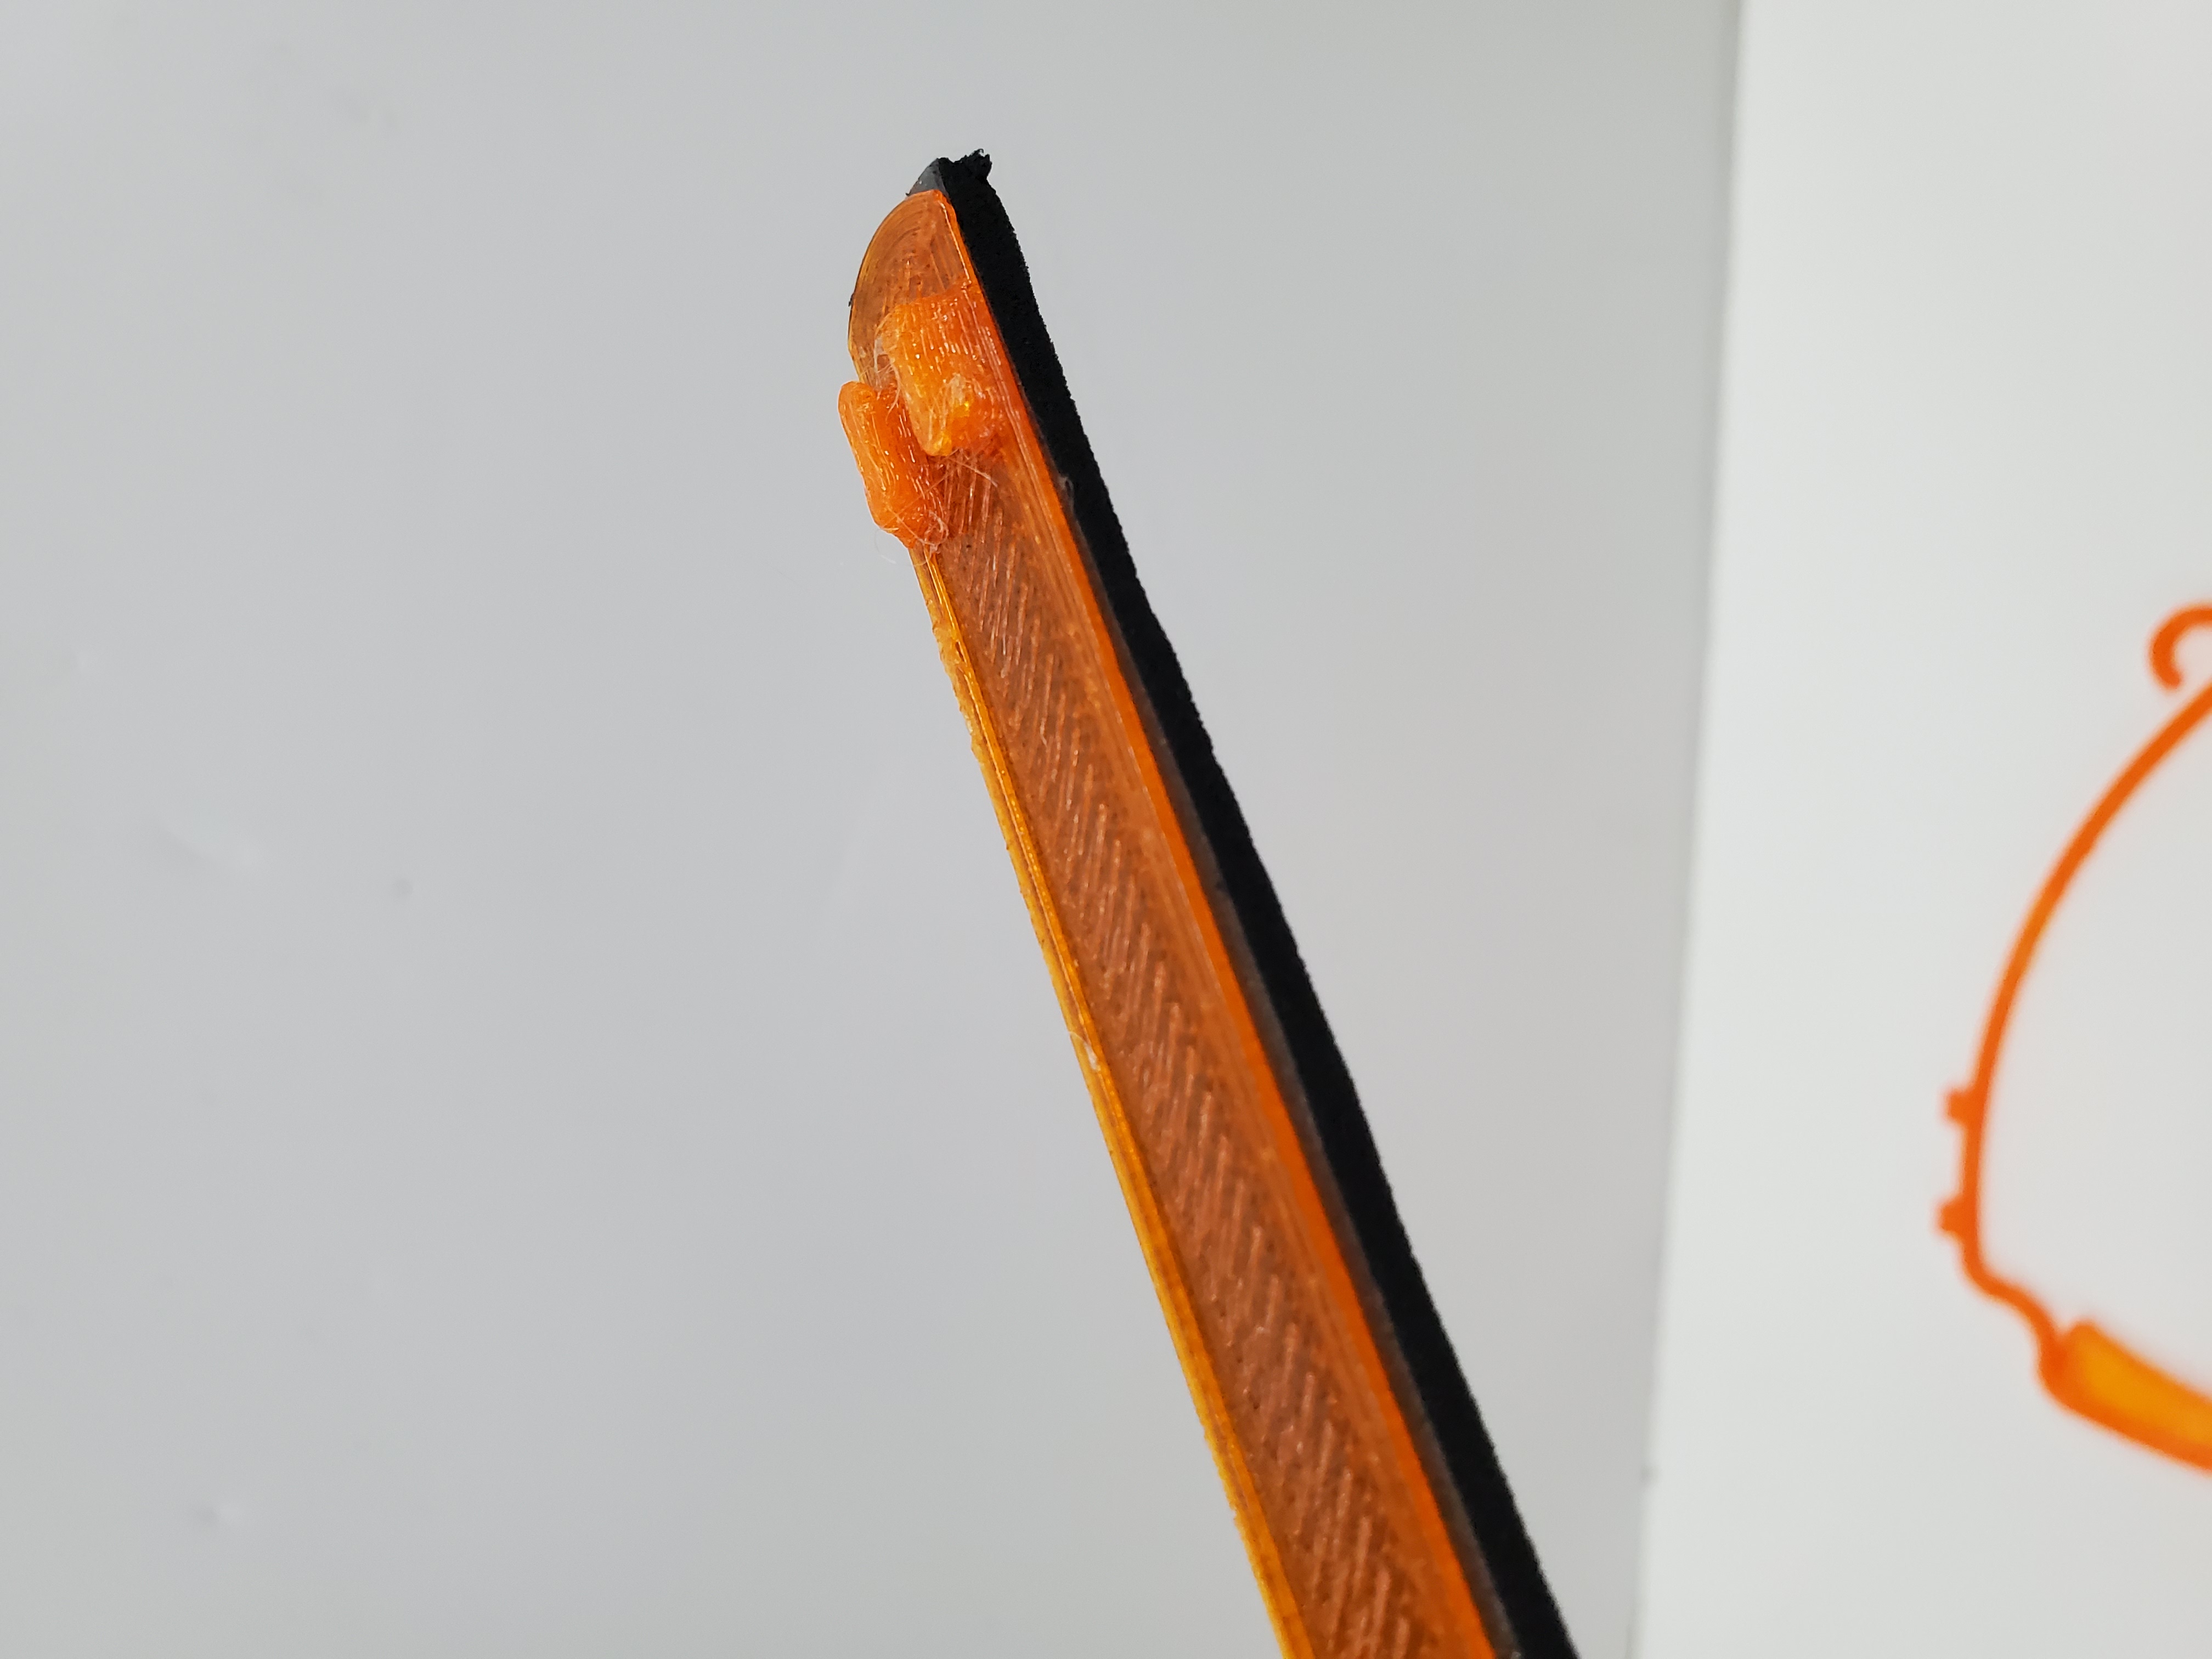 Flat comfort band for 3DVerkstan Face Shield